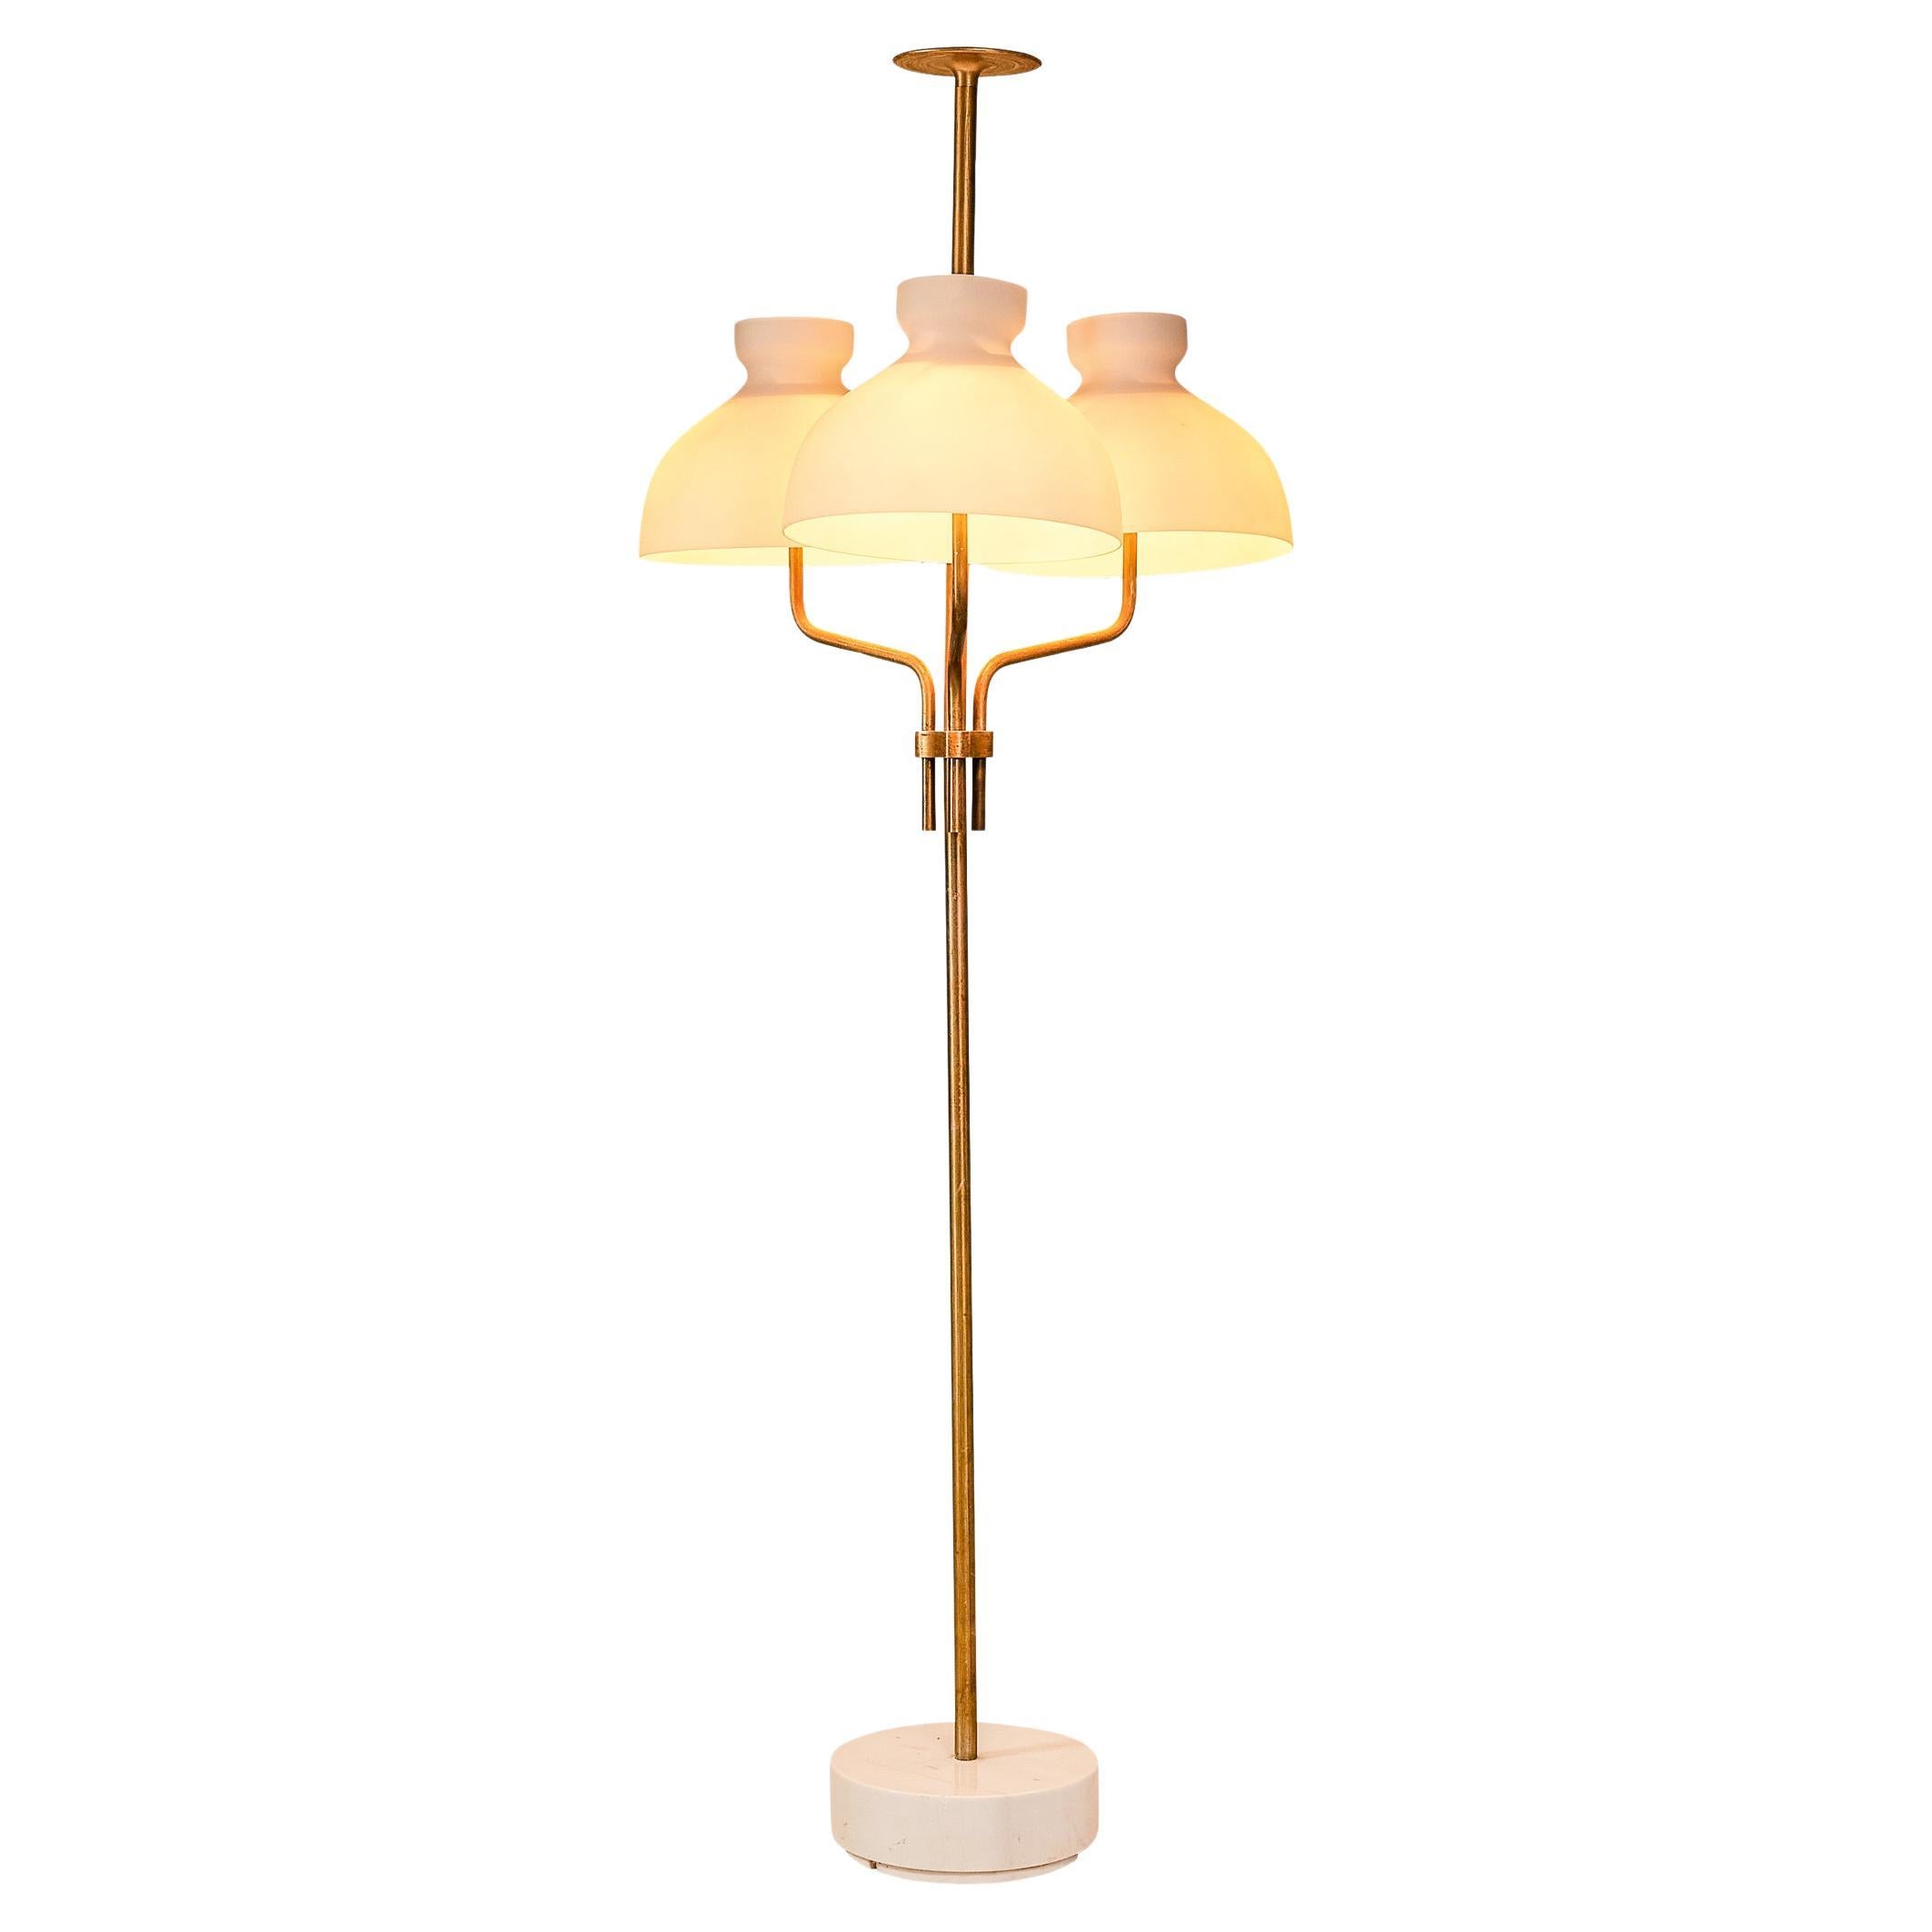 Ignazio Gardella for Azucena 'Arenzano' Floor Lamp in Brass & Opaline Glass  For Sale